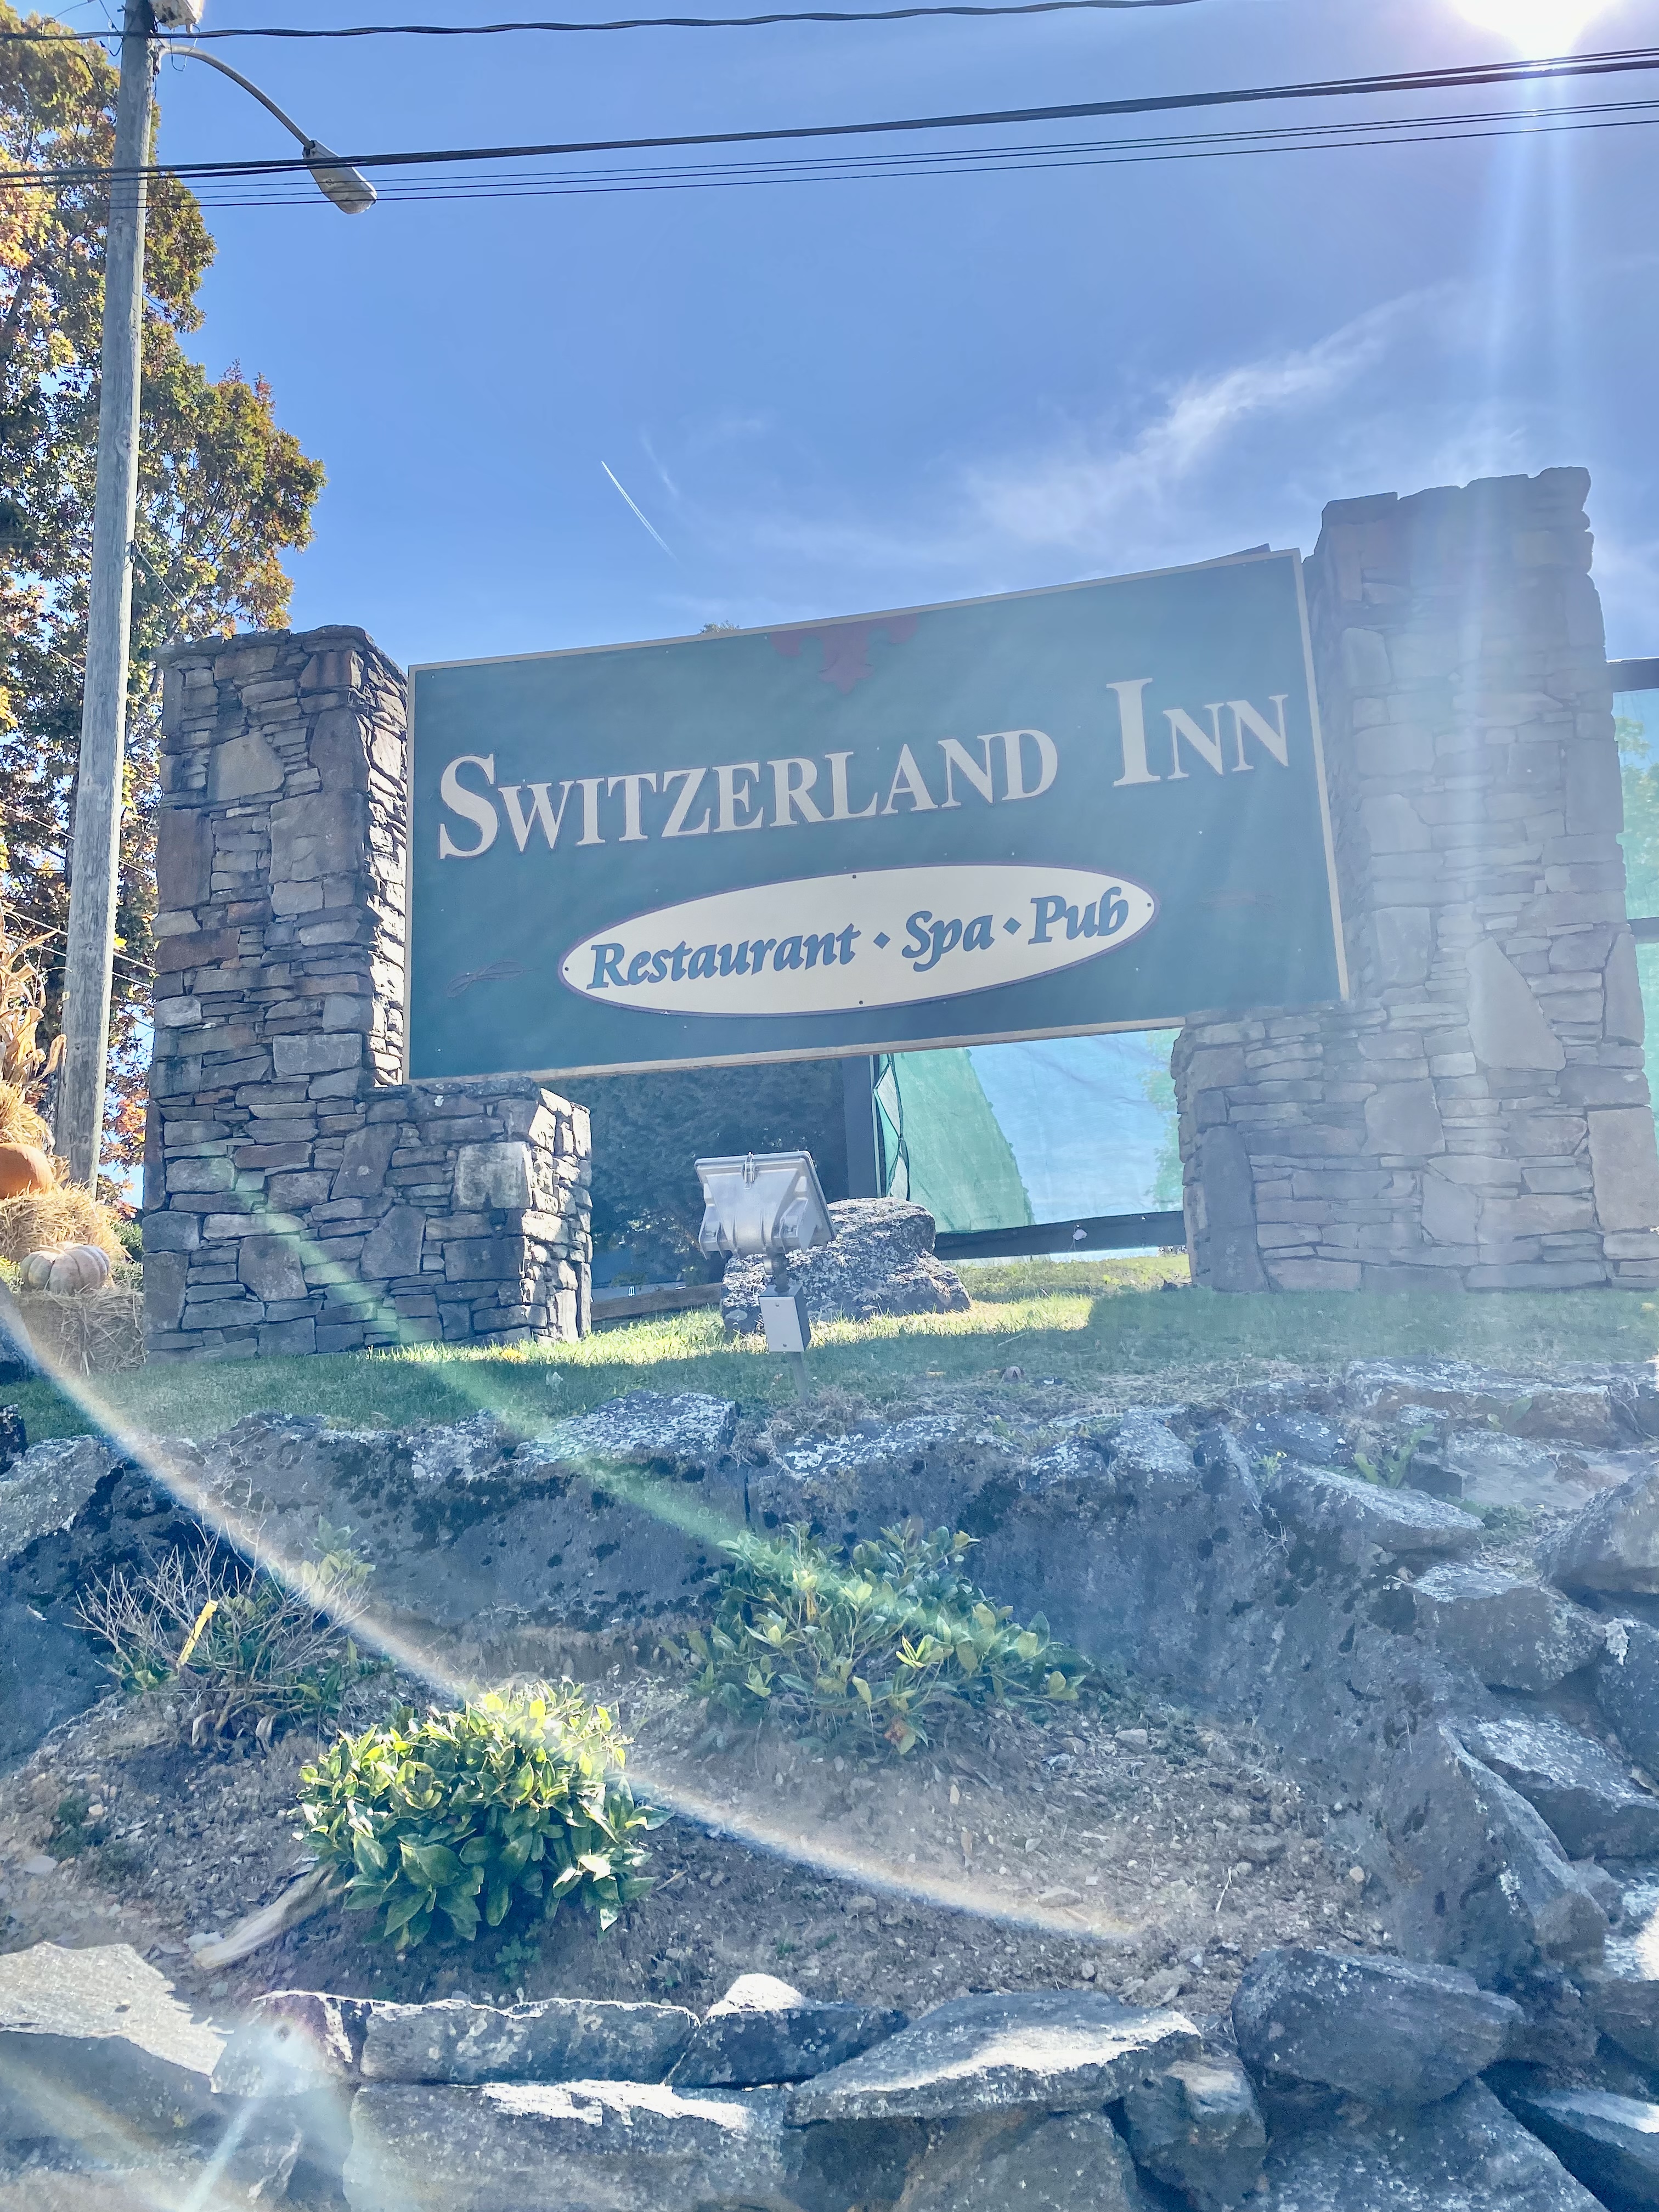 Switzerland inn sign in nc